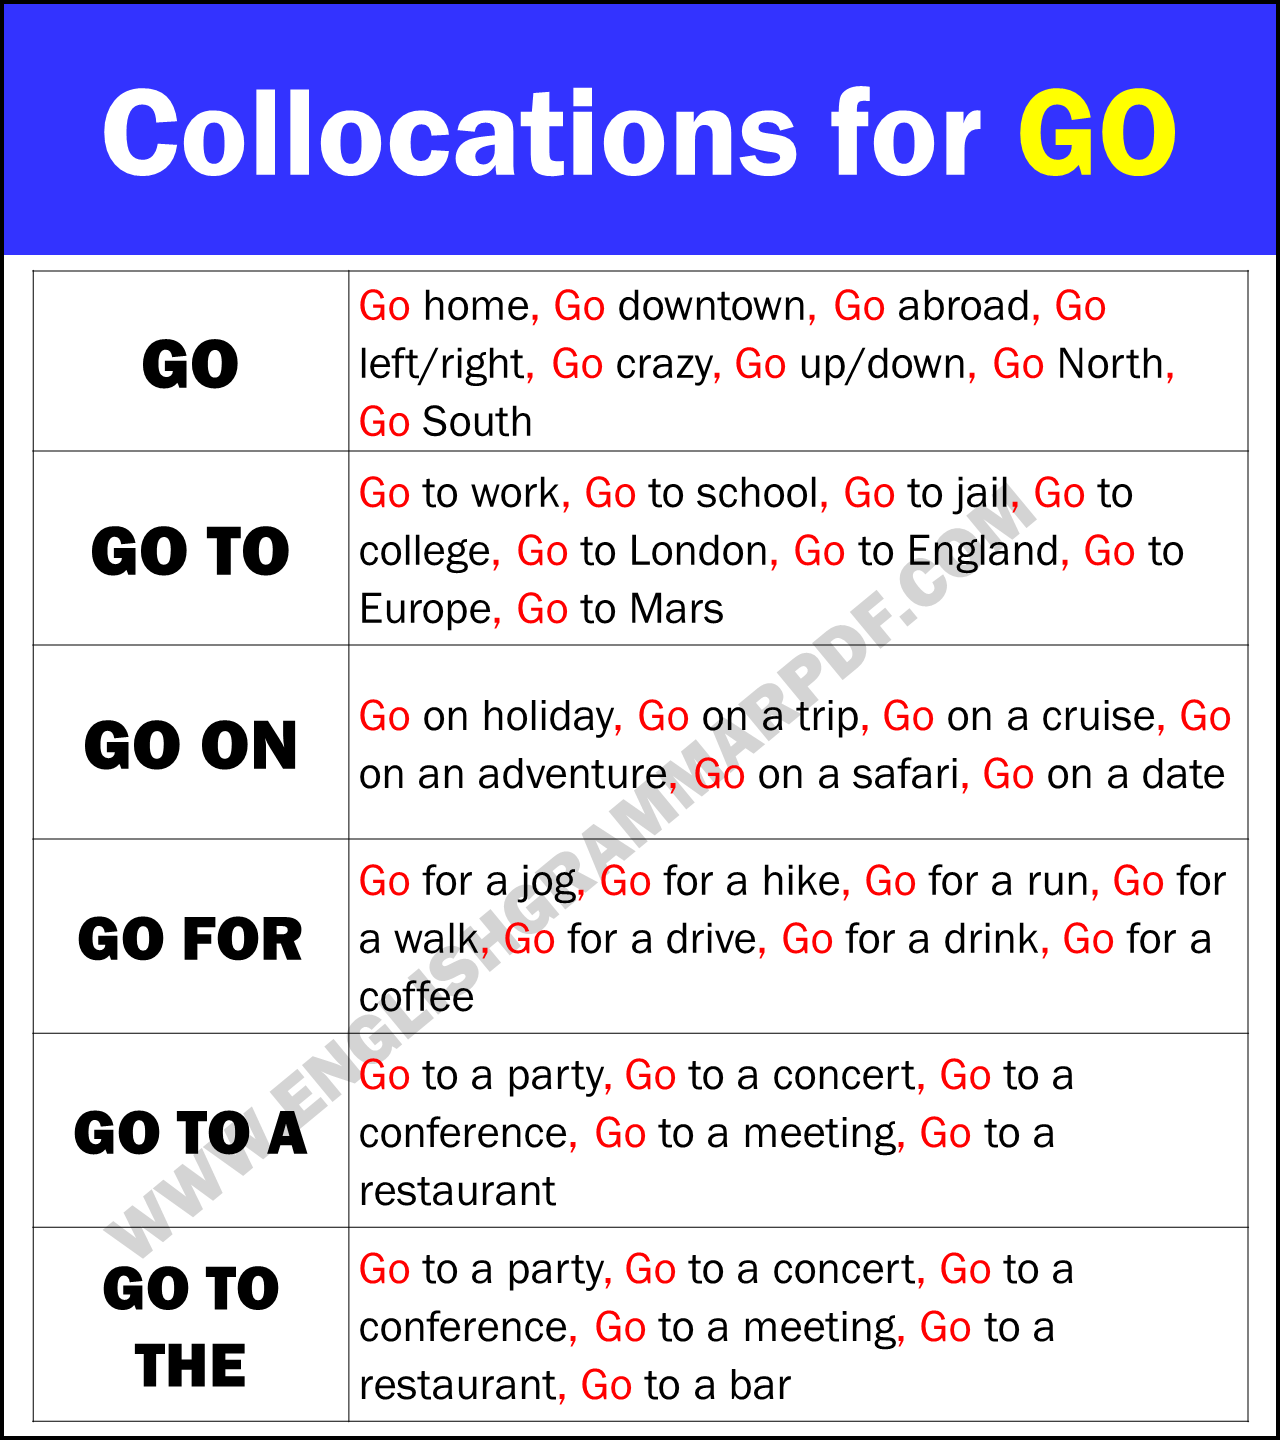 Collocations for GO